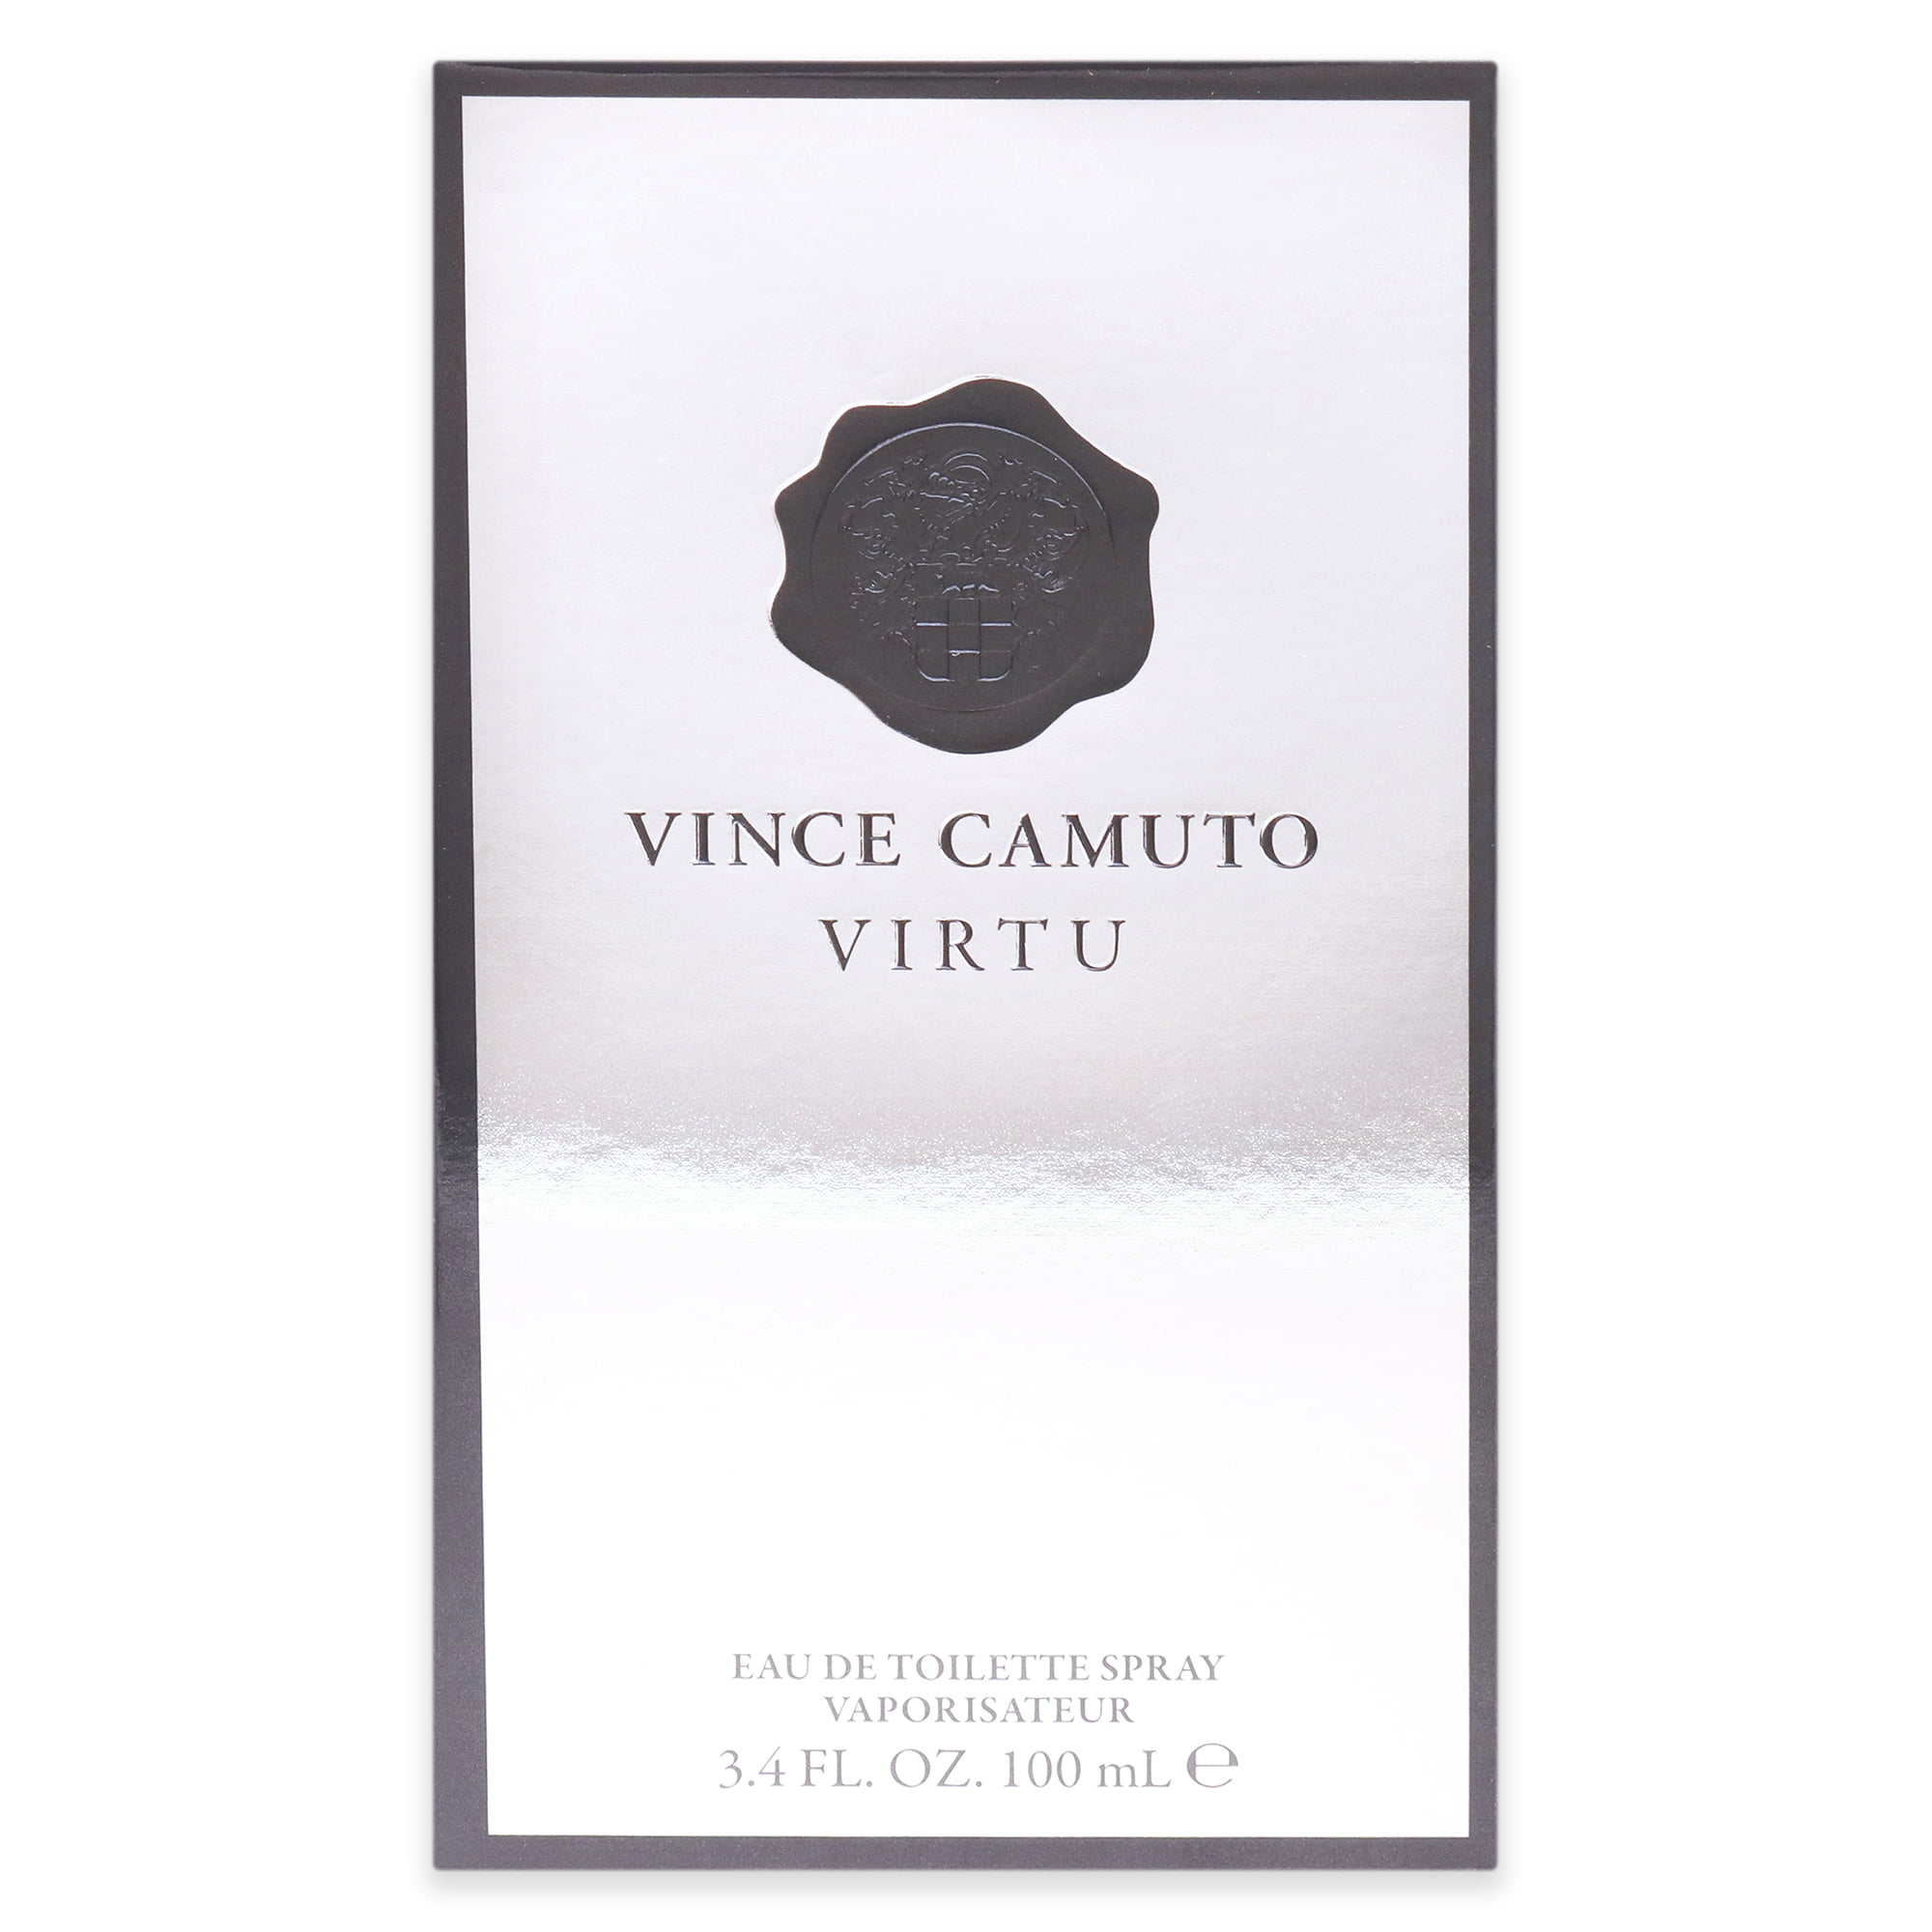 Virtu by Vince Camuto for Men - 3.4 oz EDT Spray 